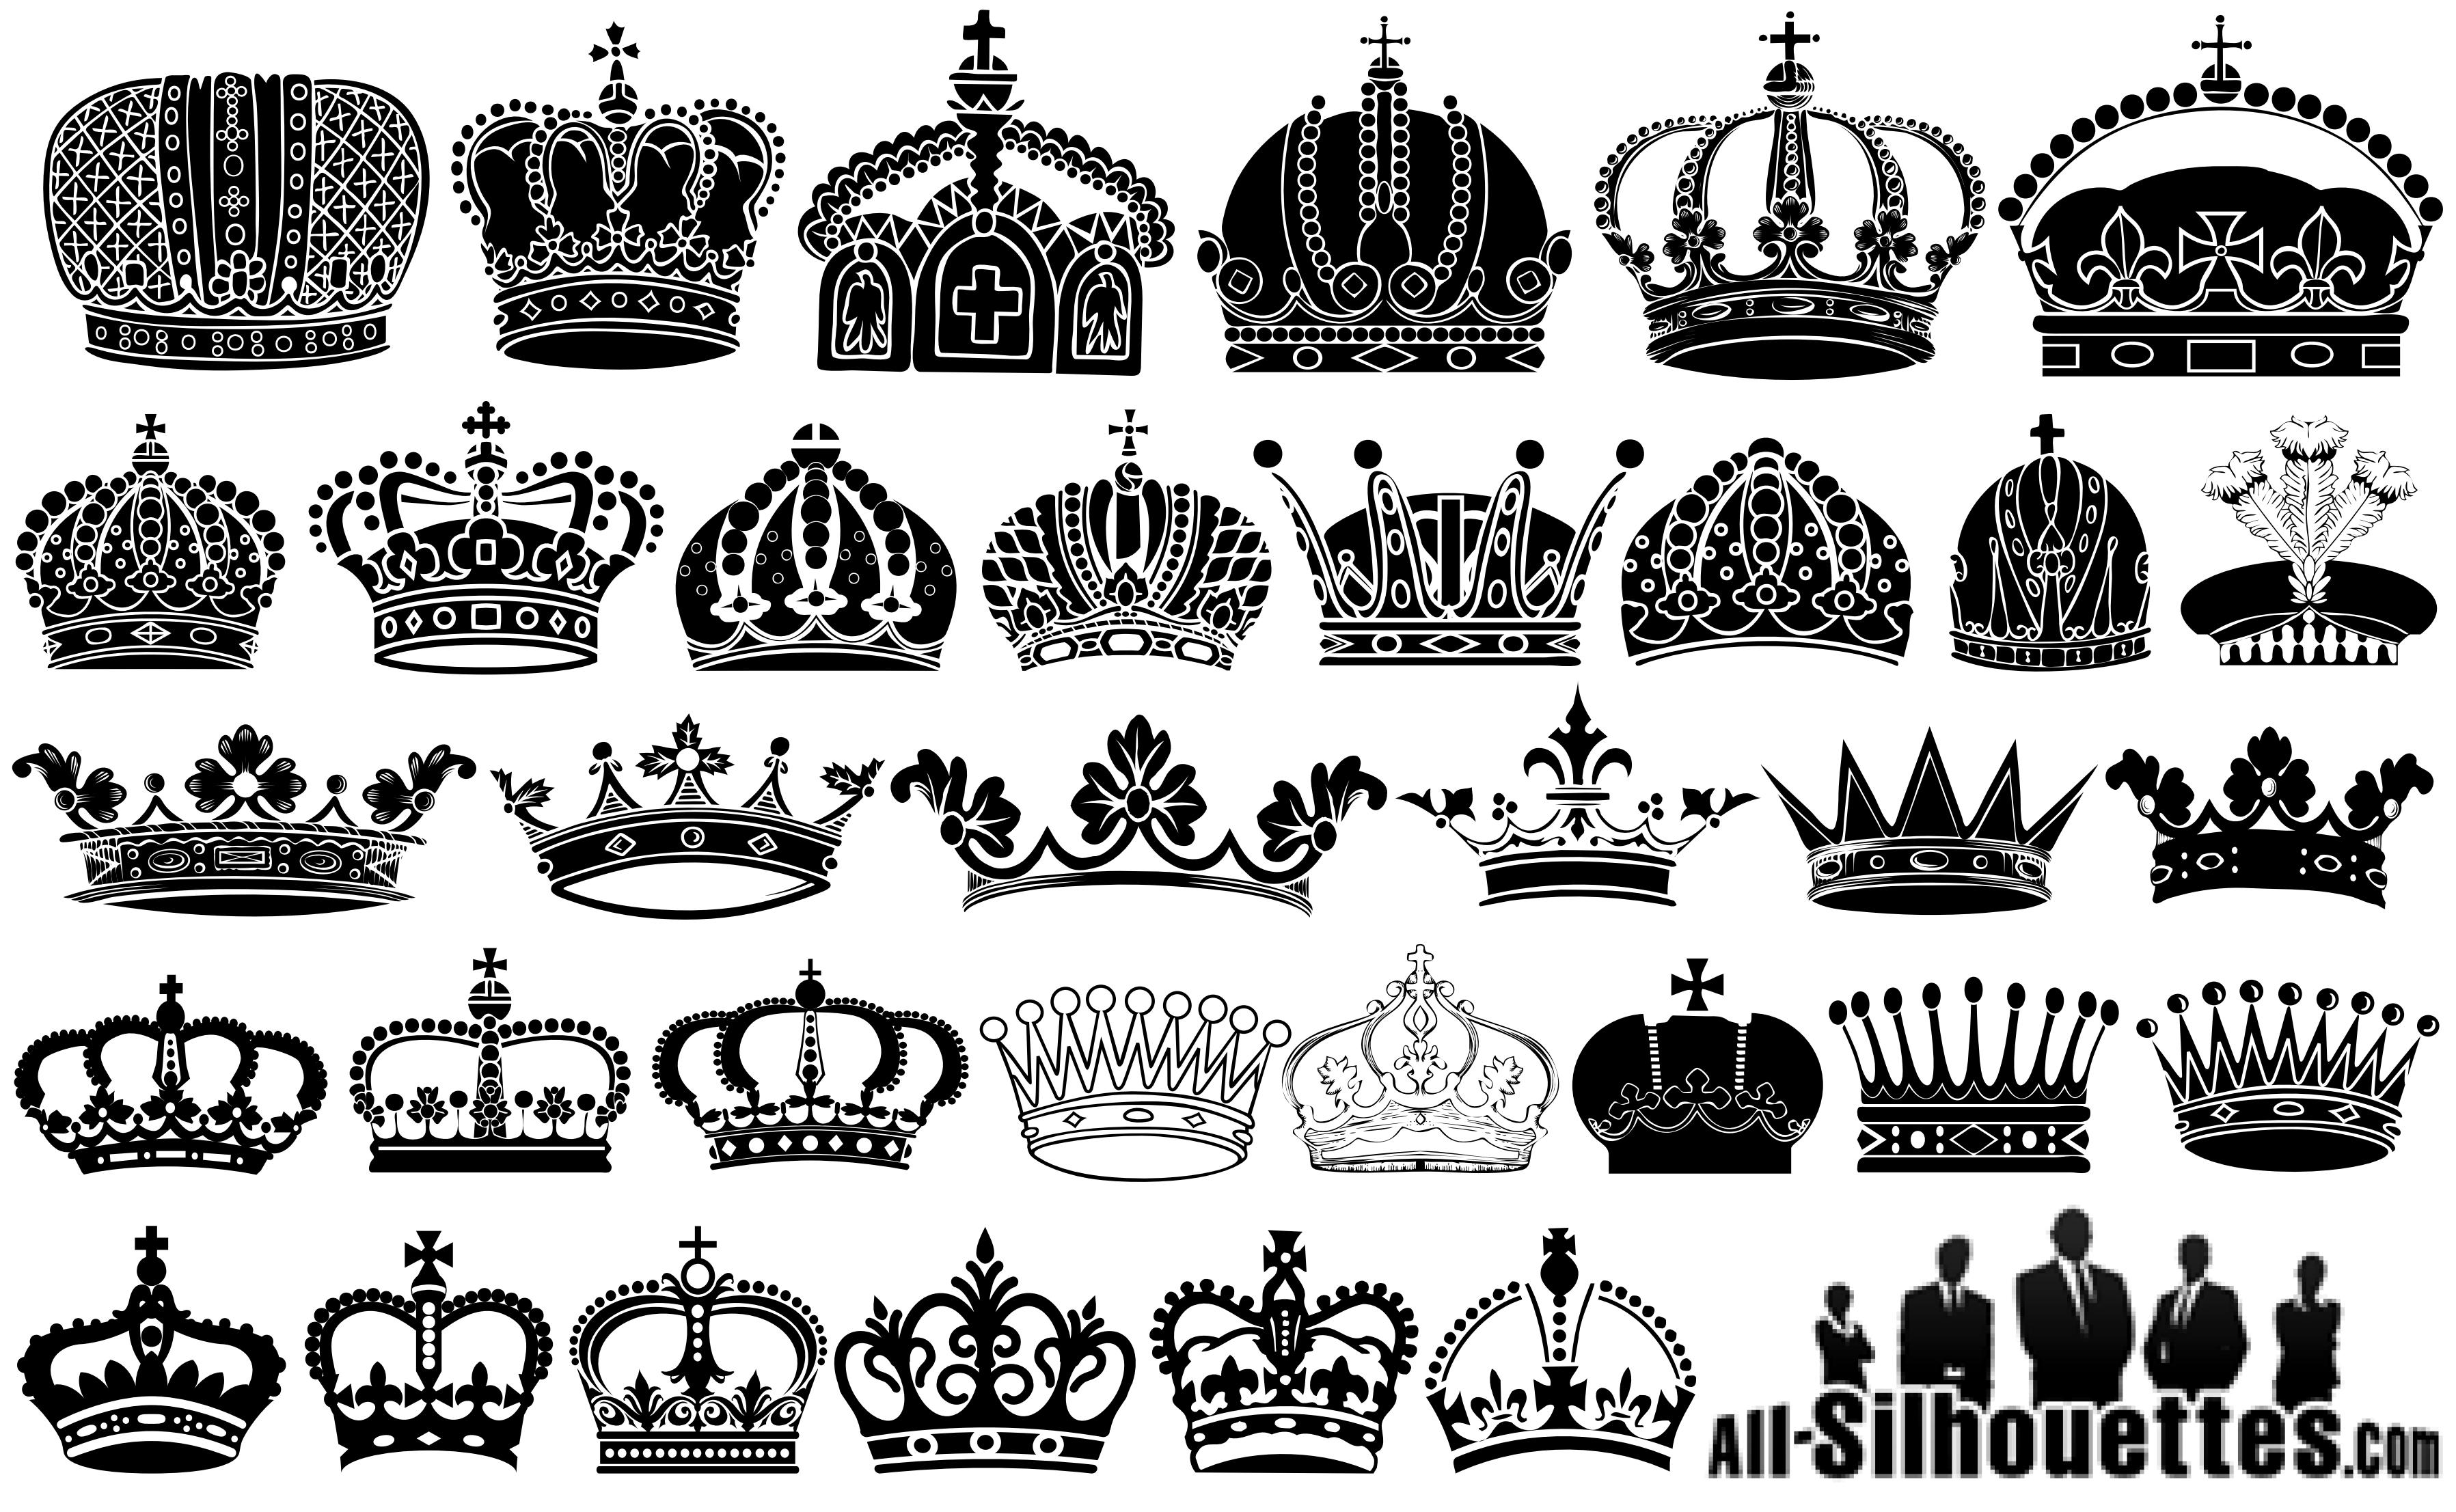 royal crown clipart images - photo #50